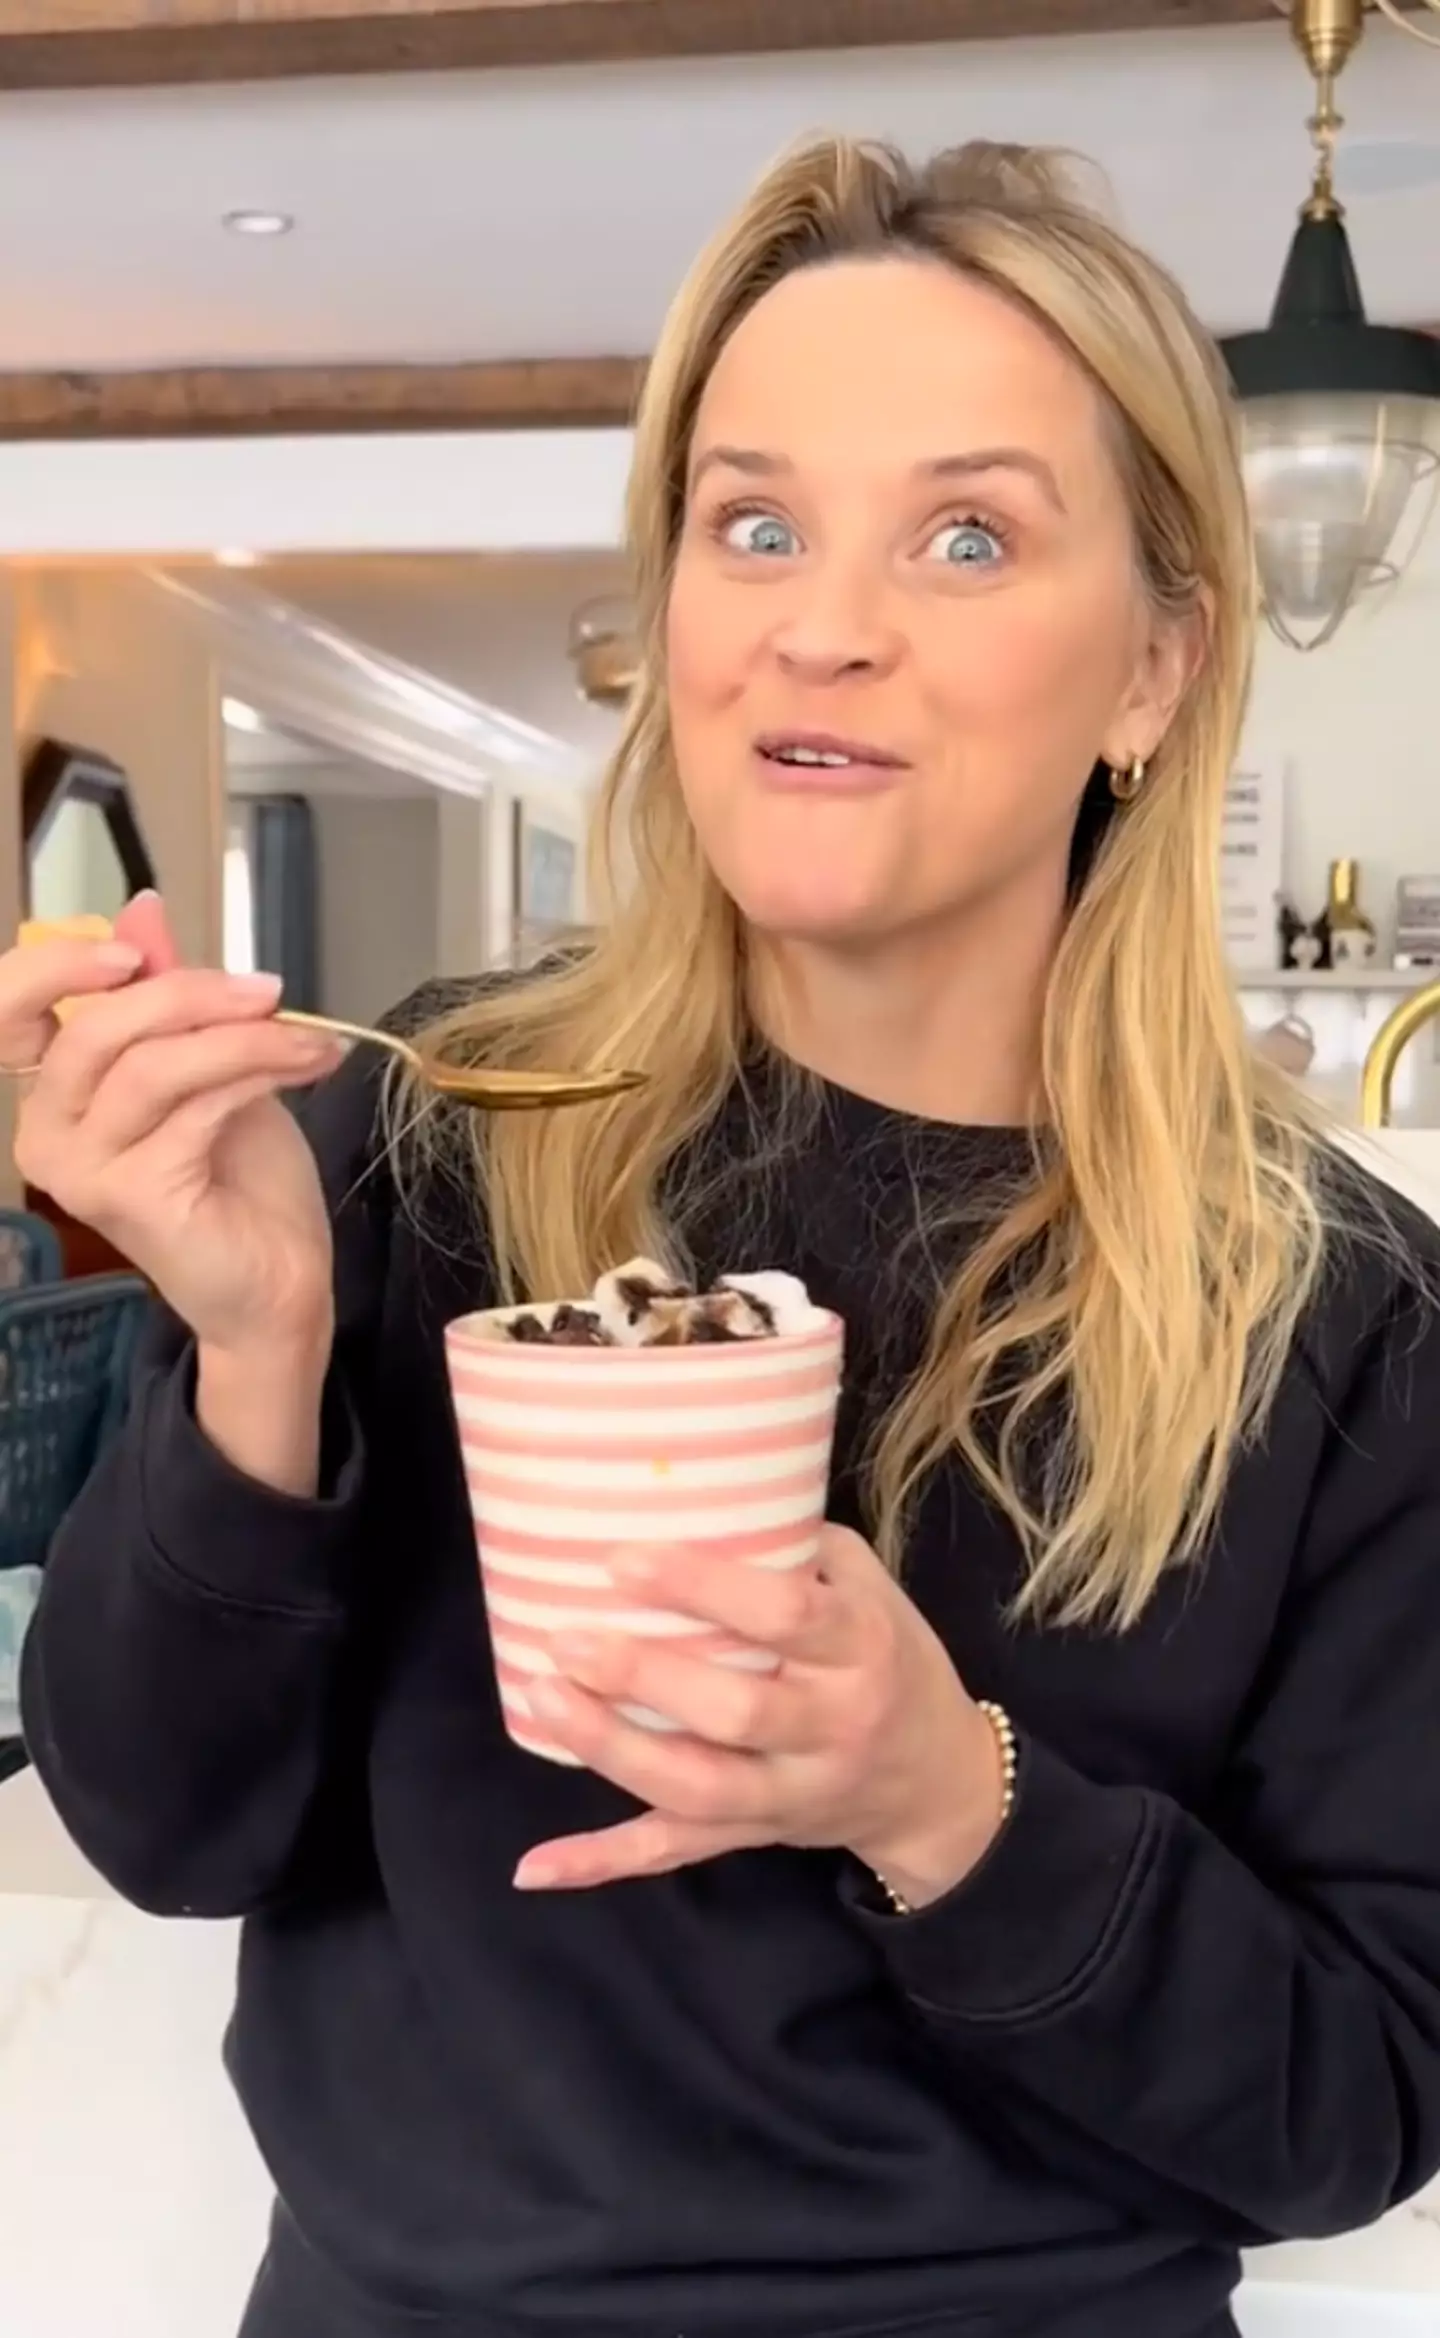 Reese shared her new sweet snack on social media.